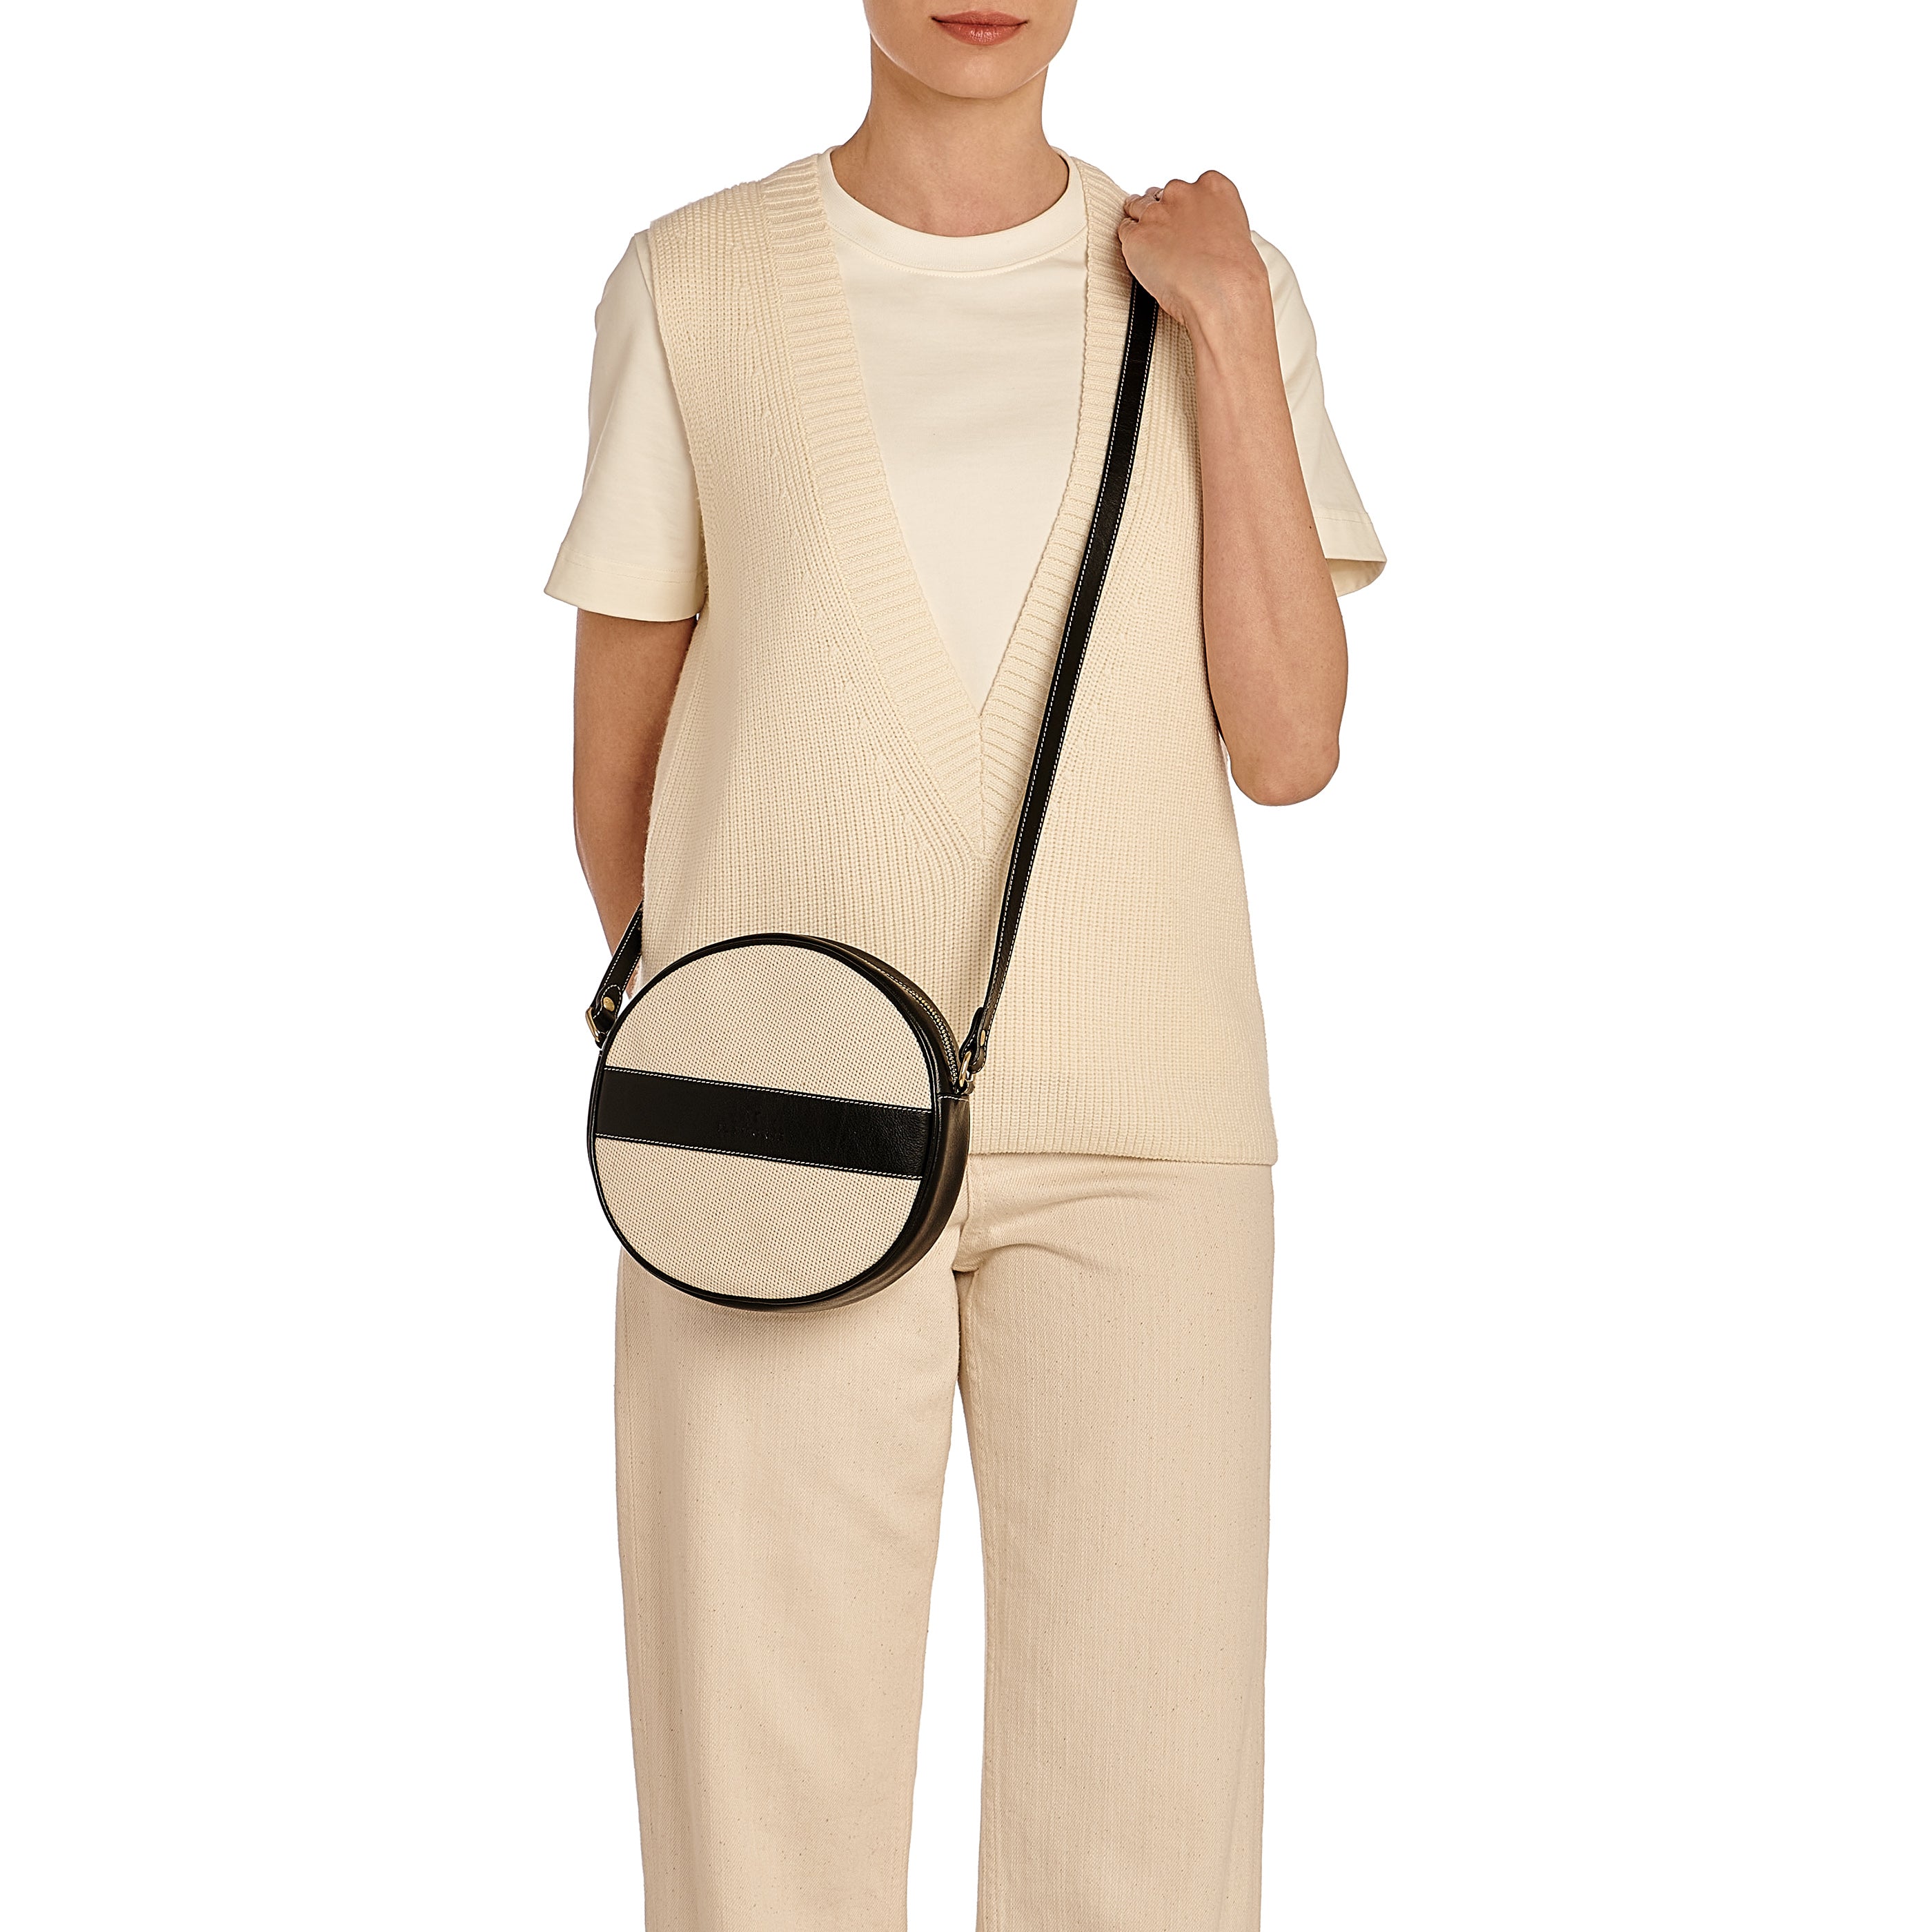 Marini | Women's crossbody bag in fabric color natural / black